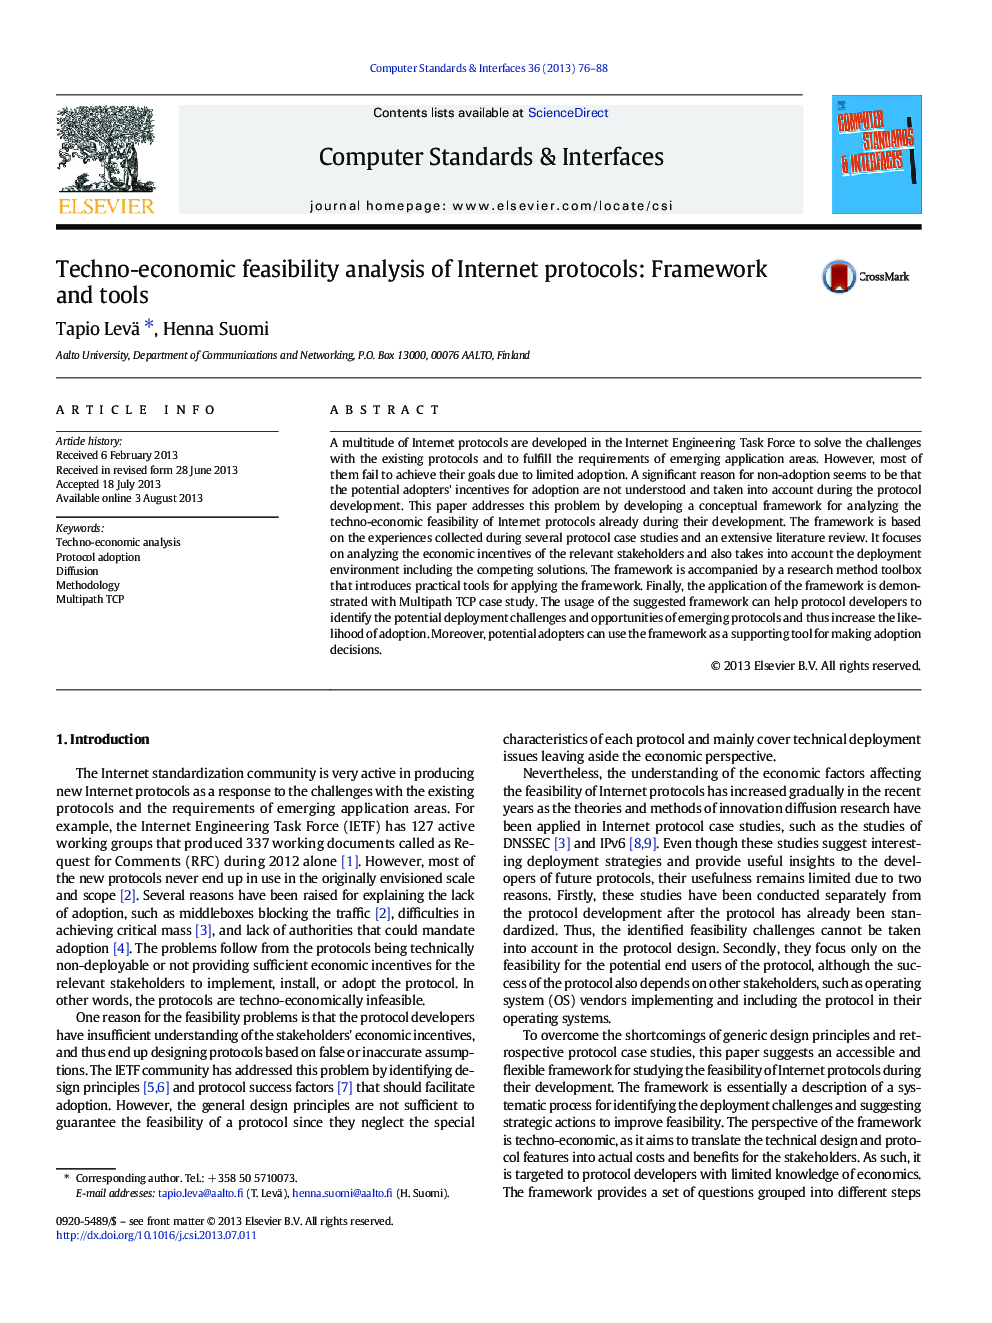 Techno-economic feasibility analysis of Internet protocols: Framework and tools